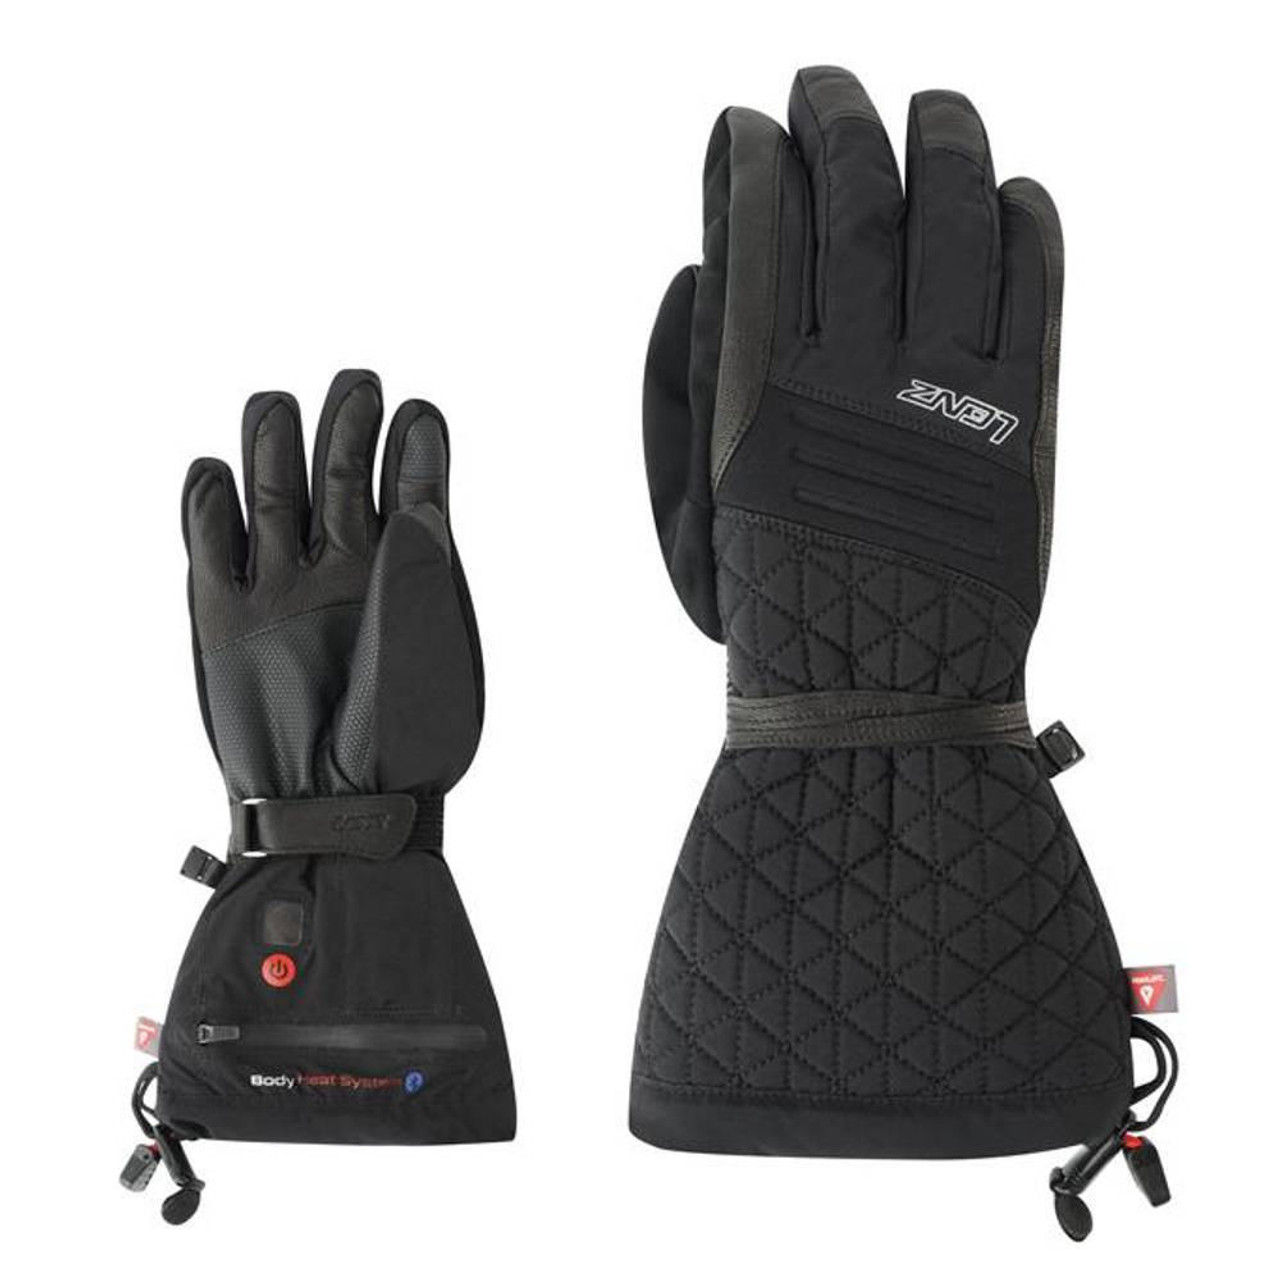 Heat glove 4.0 women